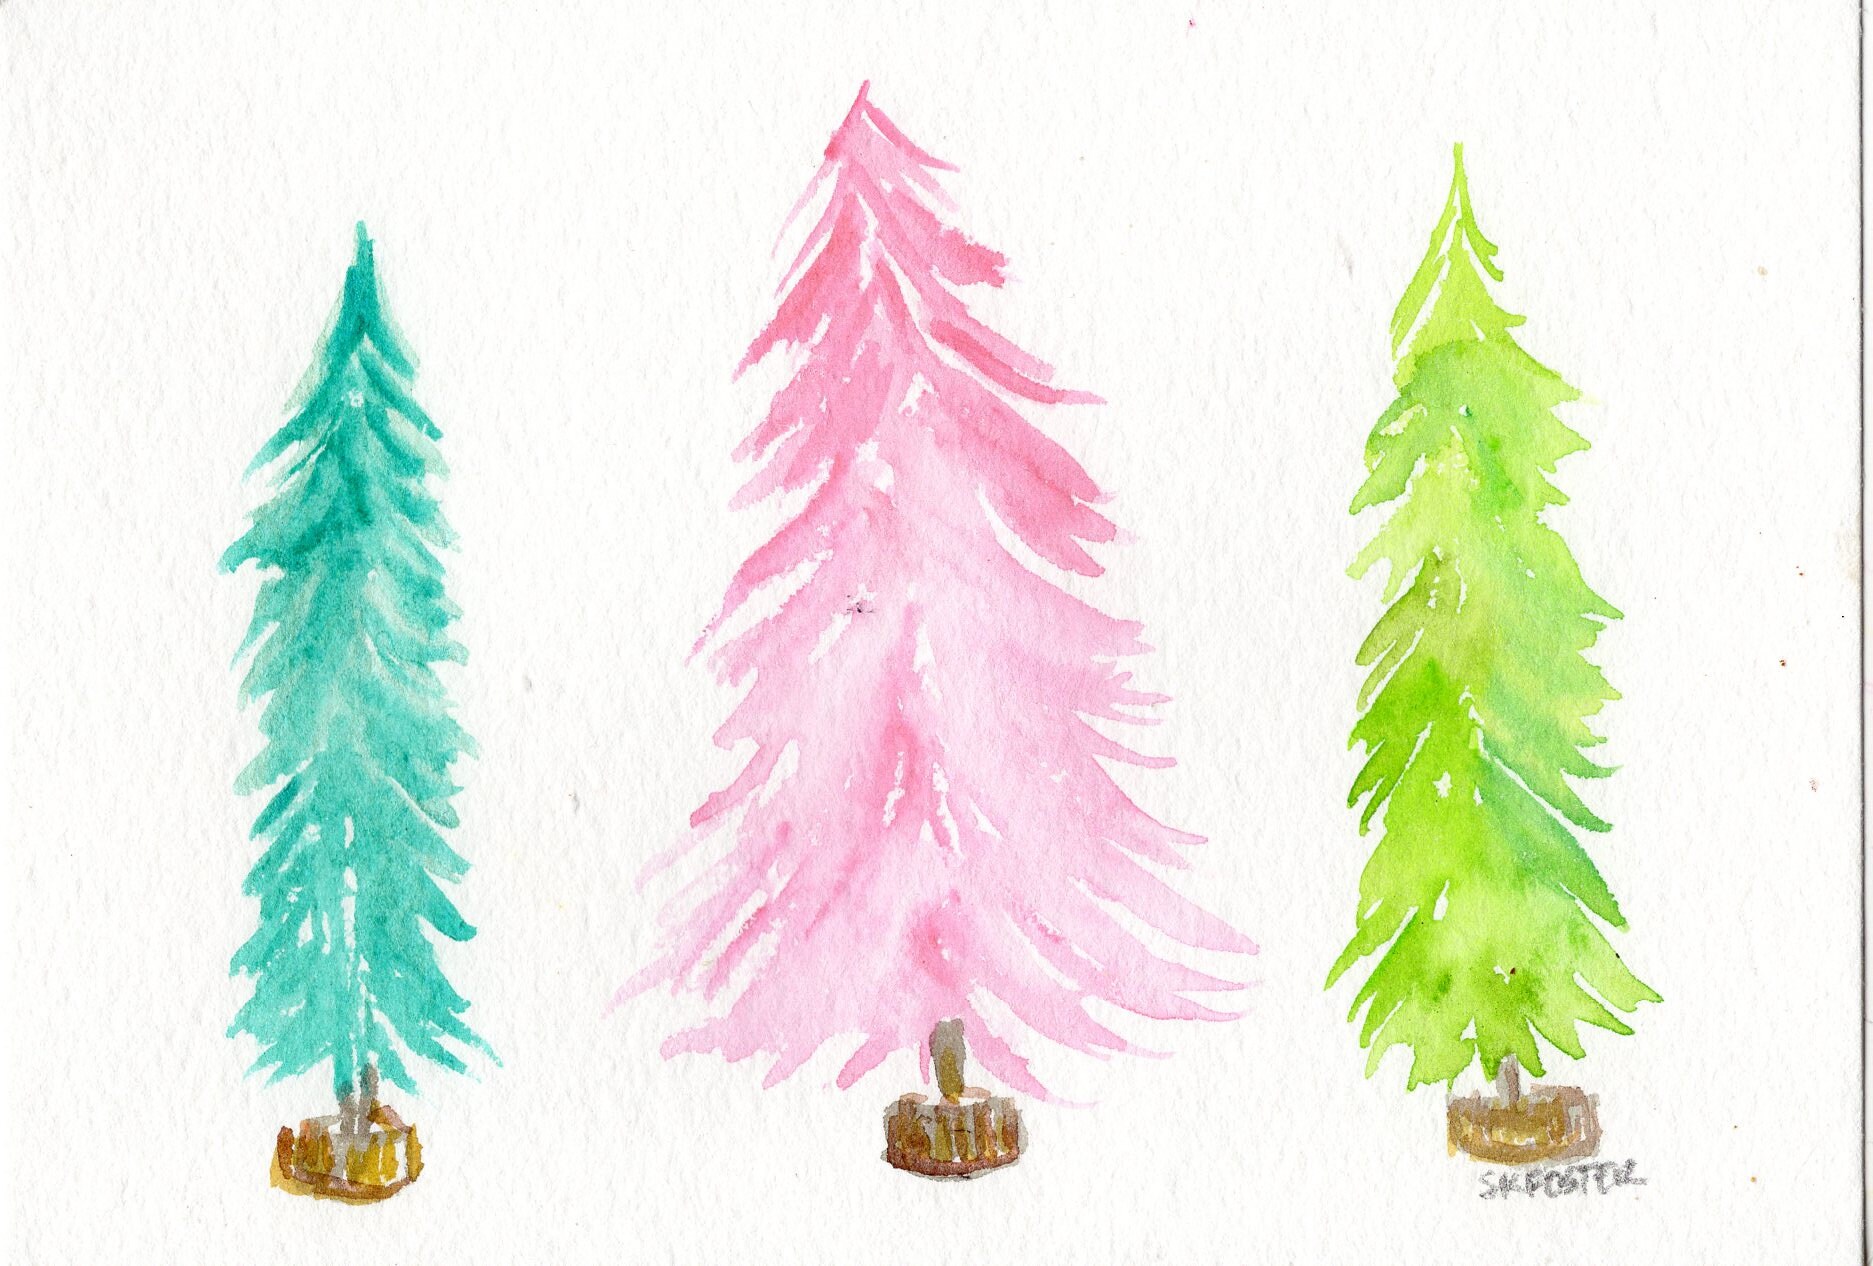 Easy Watercolor Christmas Tree Series - Using Brusho Powders